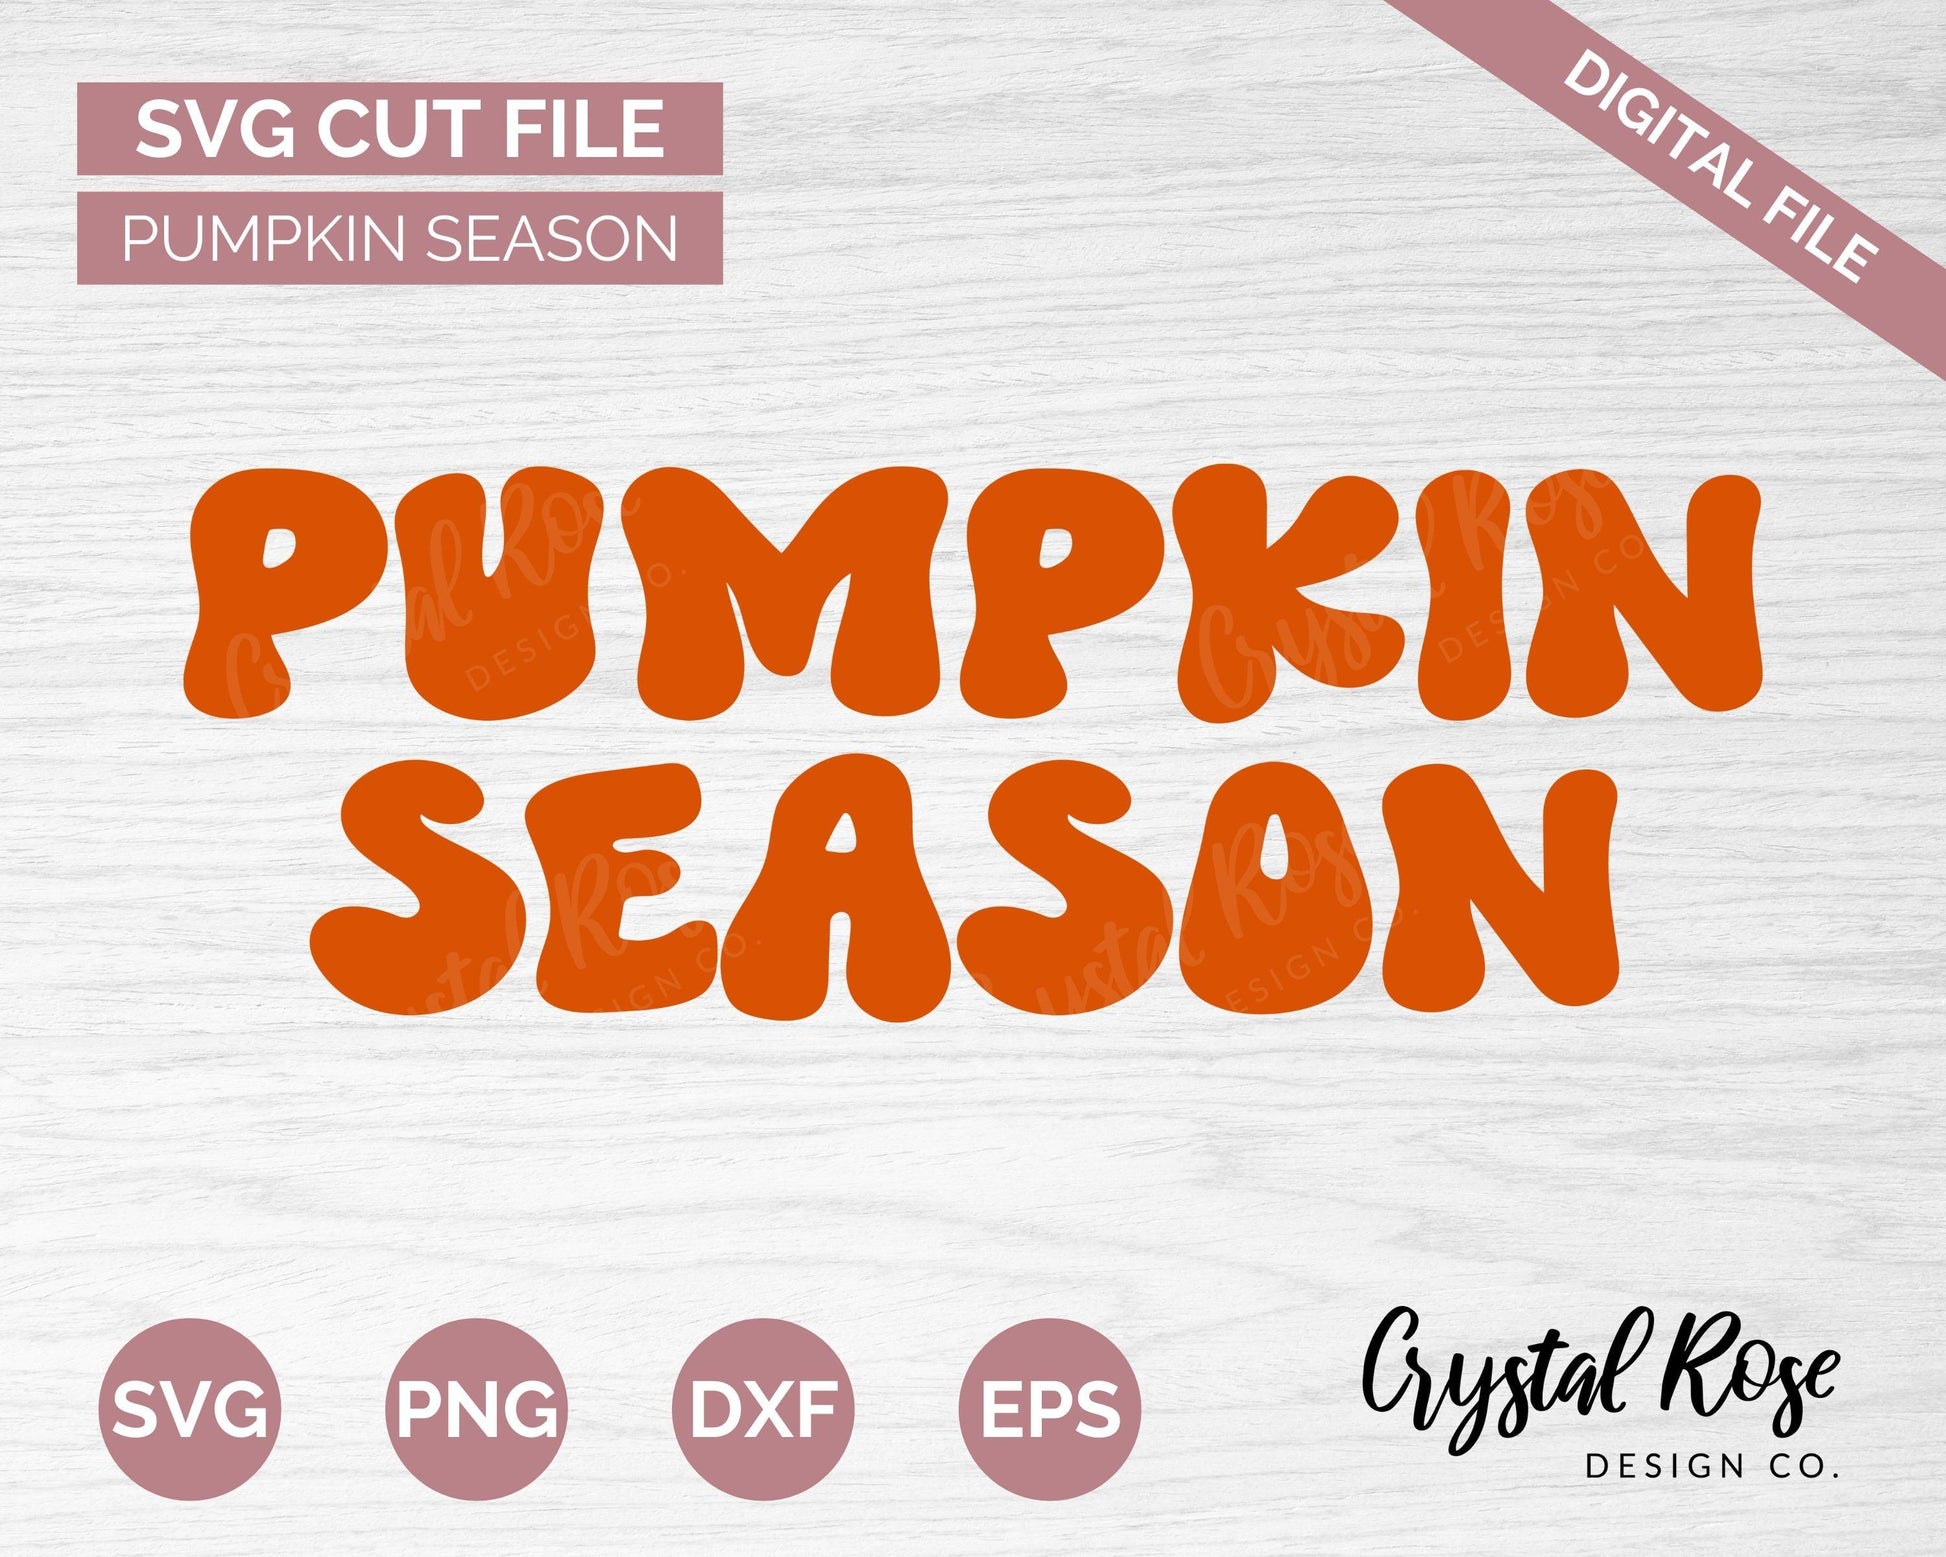 Pumpkin Season SVG, Halloween SVG, Digital Download, Cricut, Silhouette, Glowforge (includes svg/png/dxf/eps) - Crystal Rose Design Co.